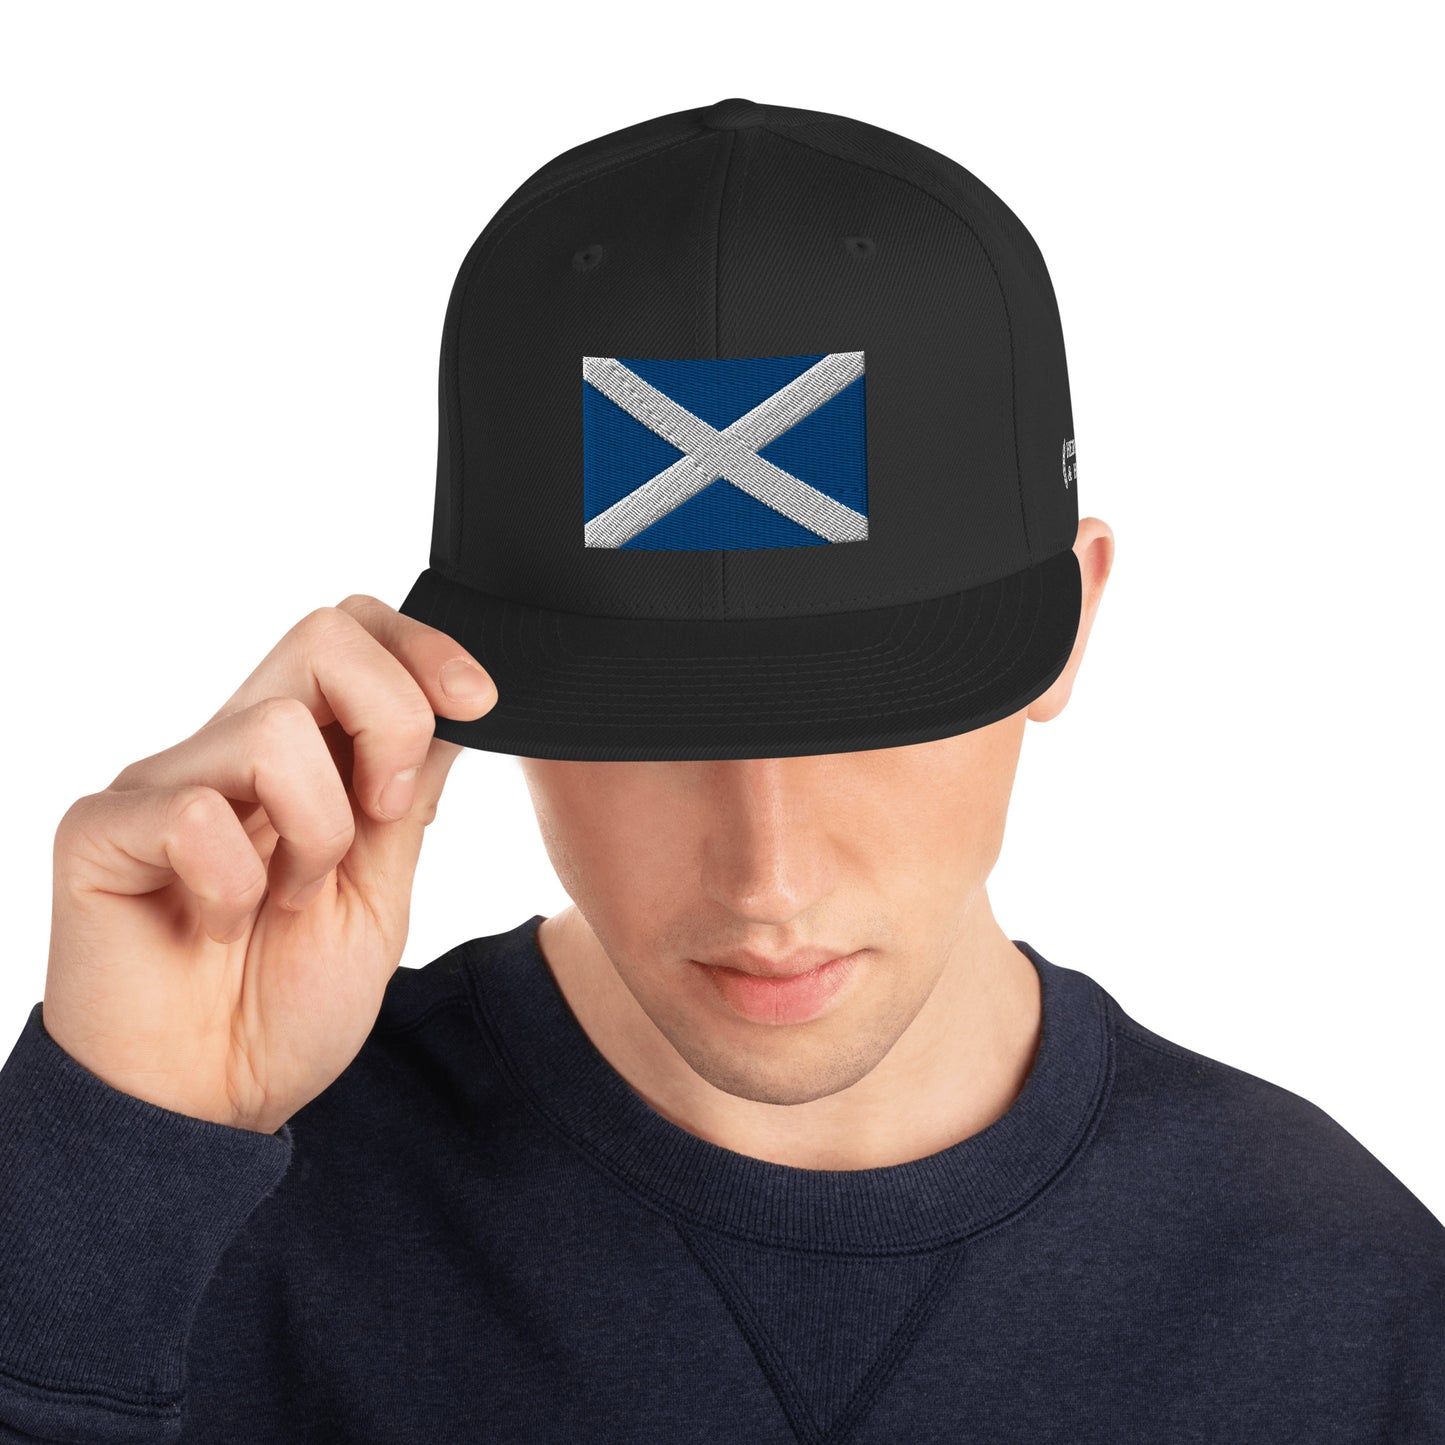 Heritage & Honor Snapback Cap 'Scotland' 2